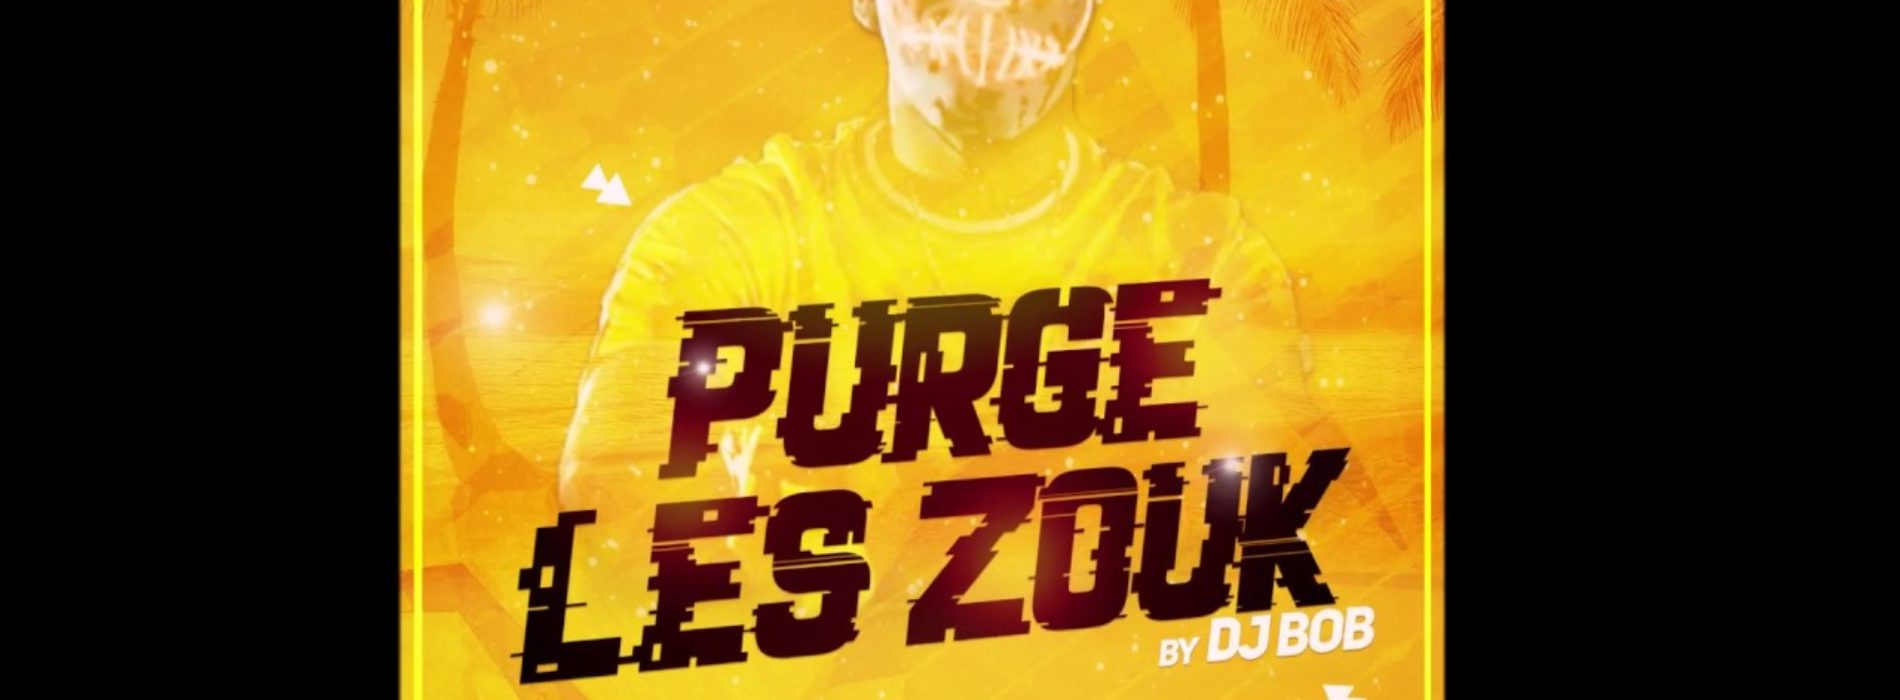 20 MIN DJ BOB – PURGE LES ZOUK – Février 2020